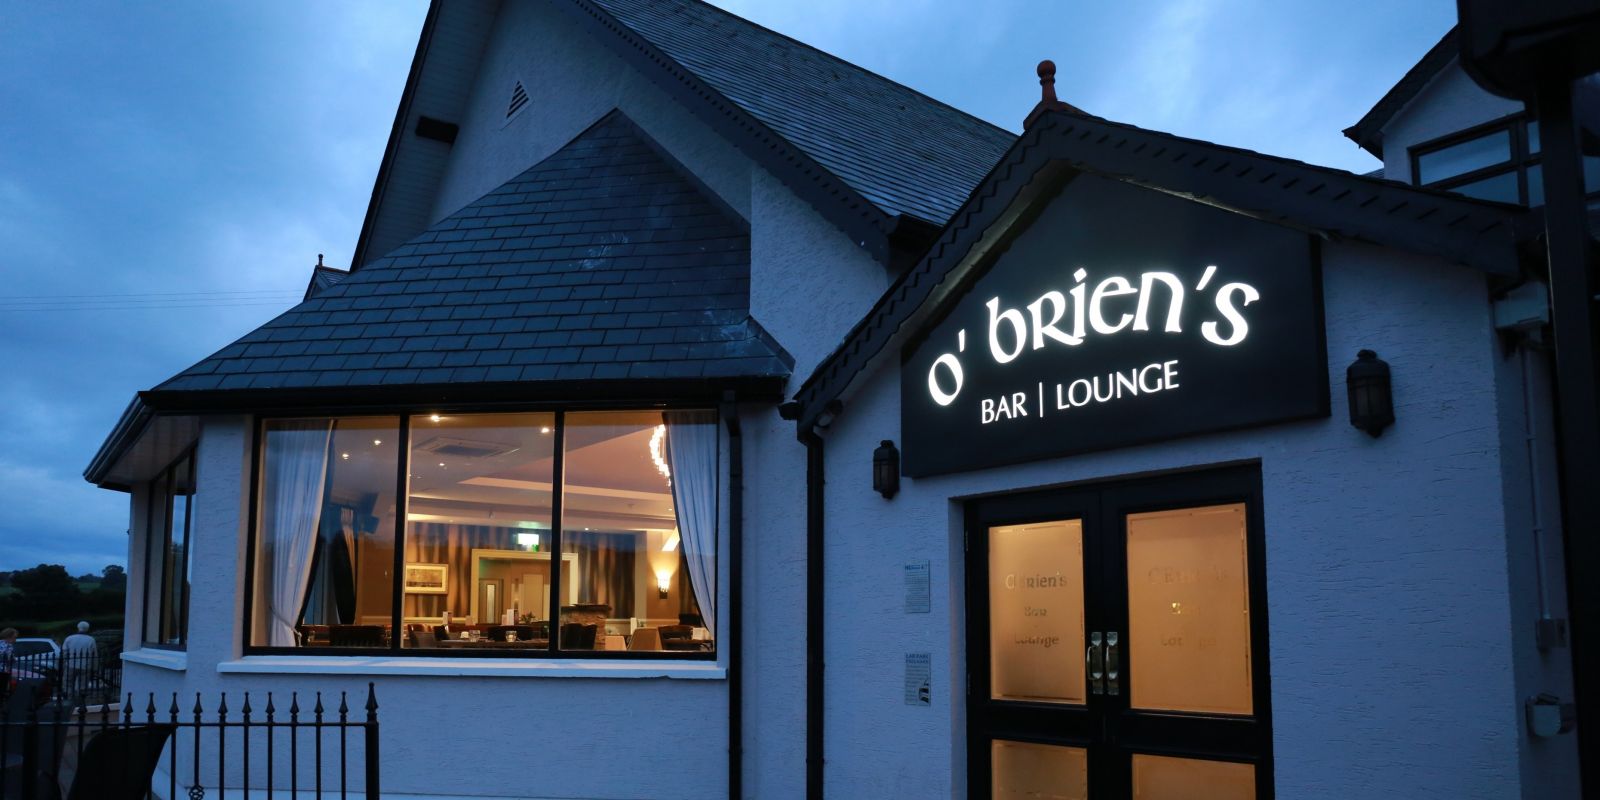 O'Brien's Bar & Restaurant, Omagh